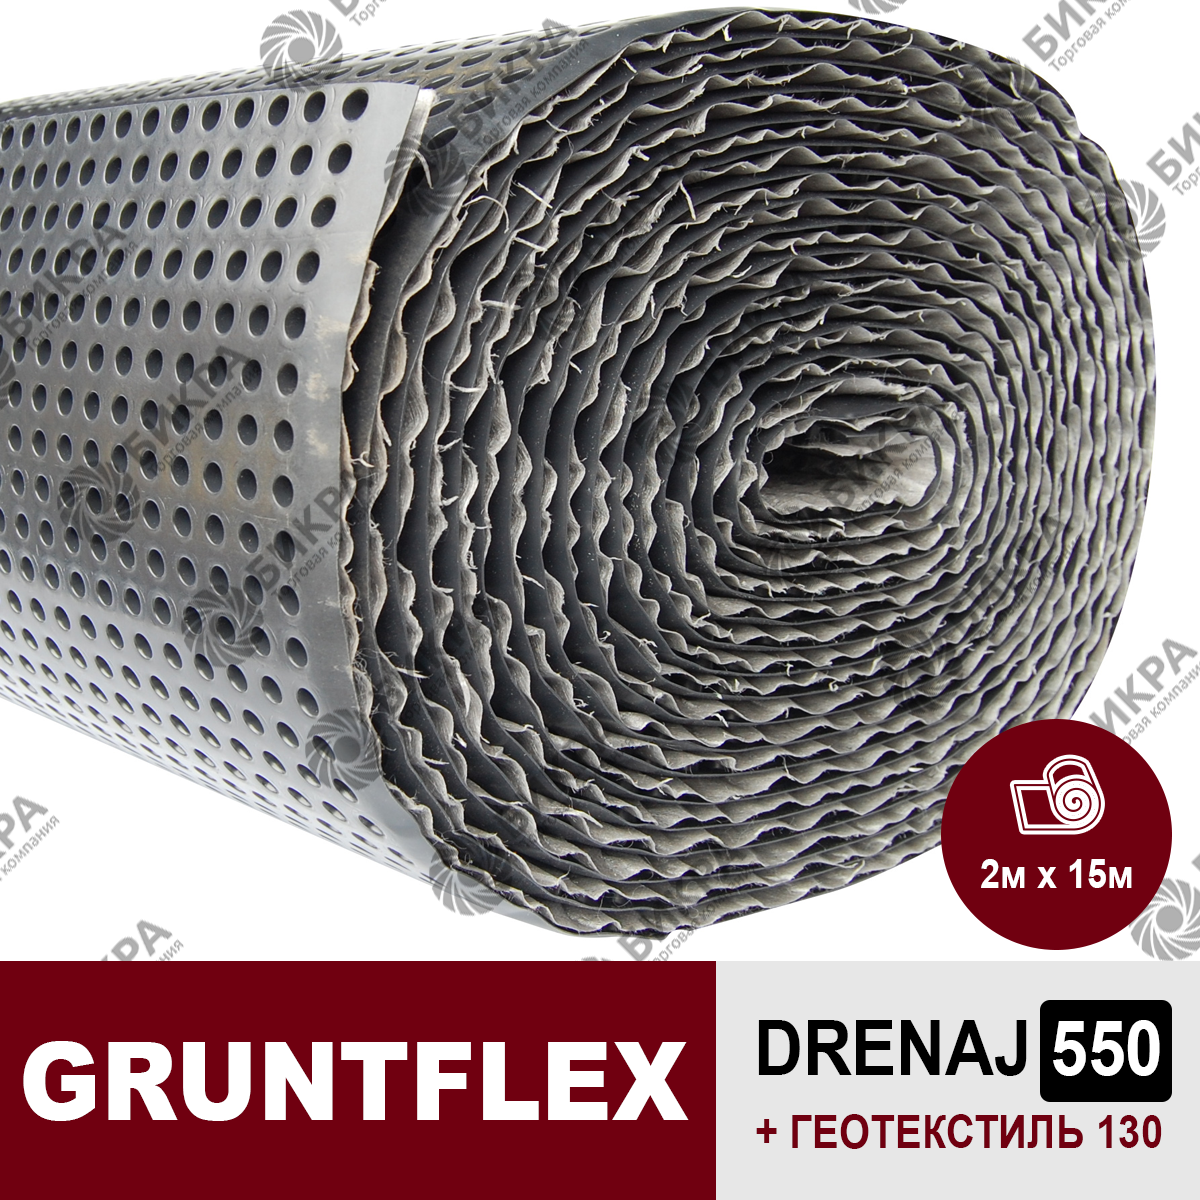 gruntflex drenaj 550 (+130 гео 15 м.п)